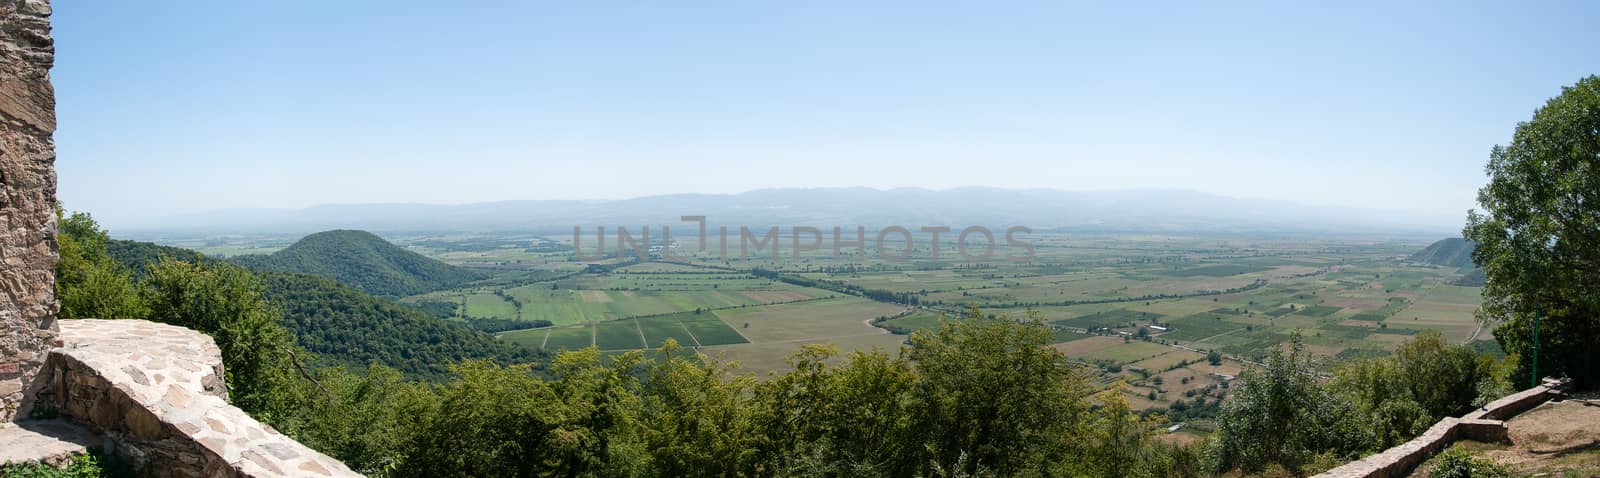 Alazani valley in Georgia panorama by javax